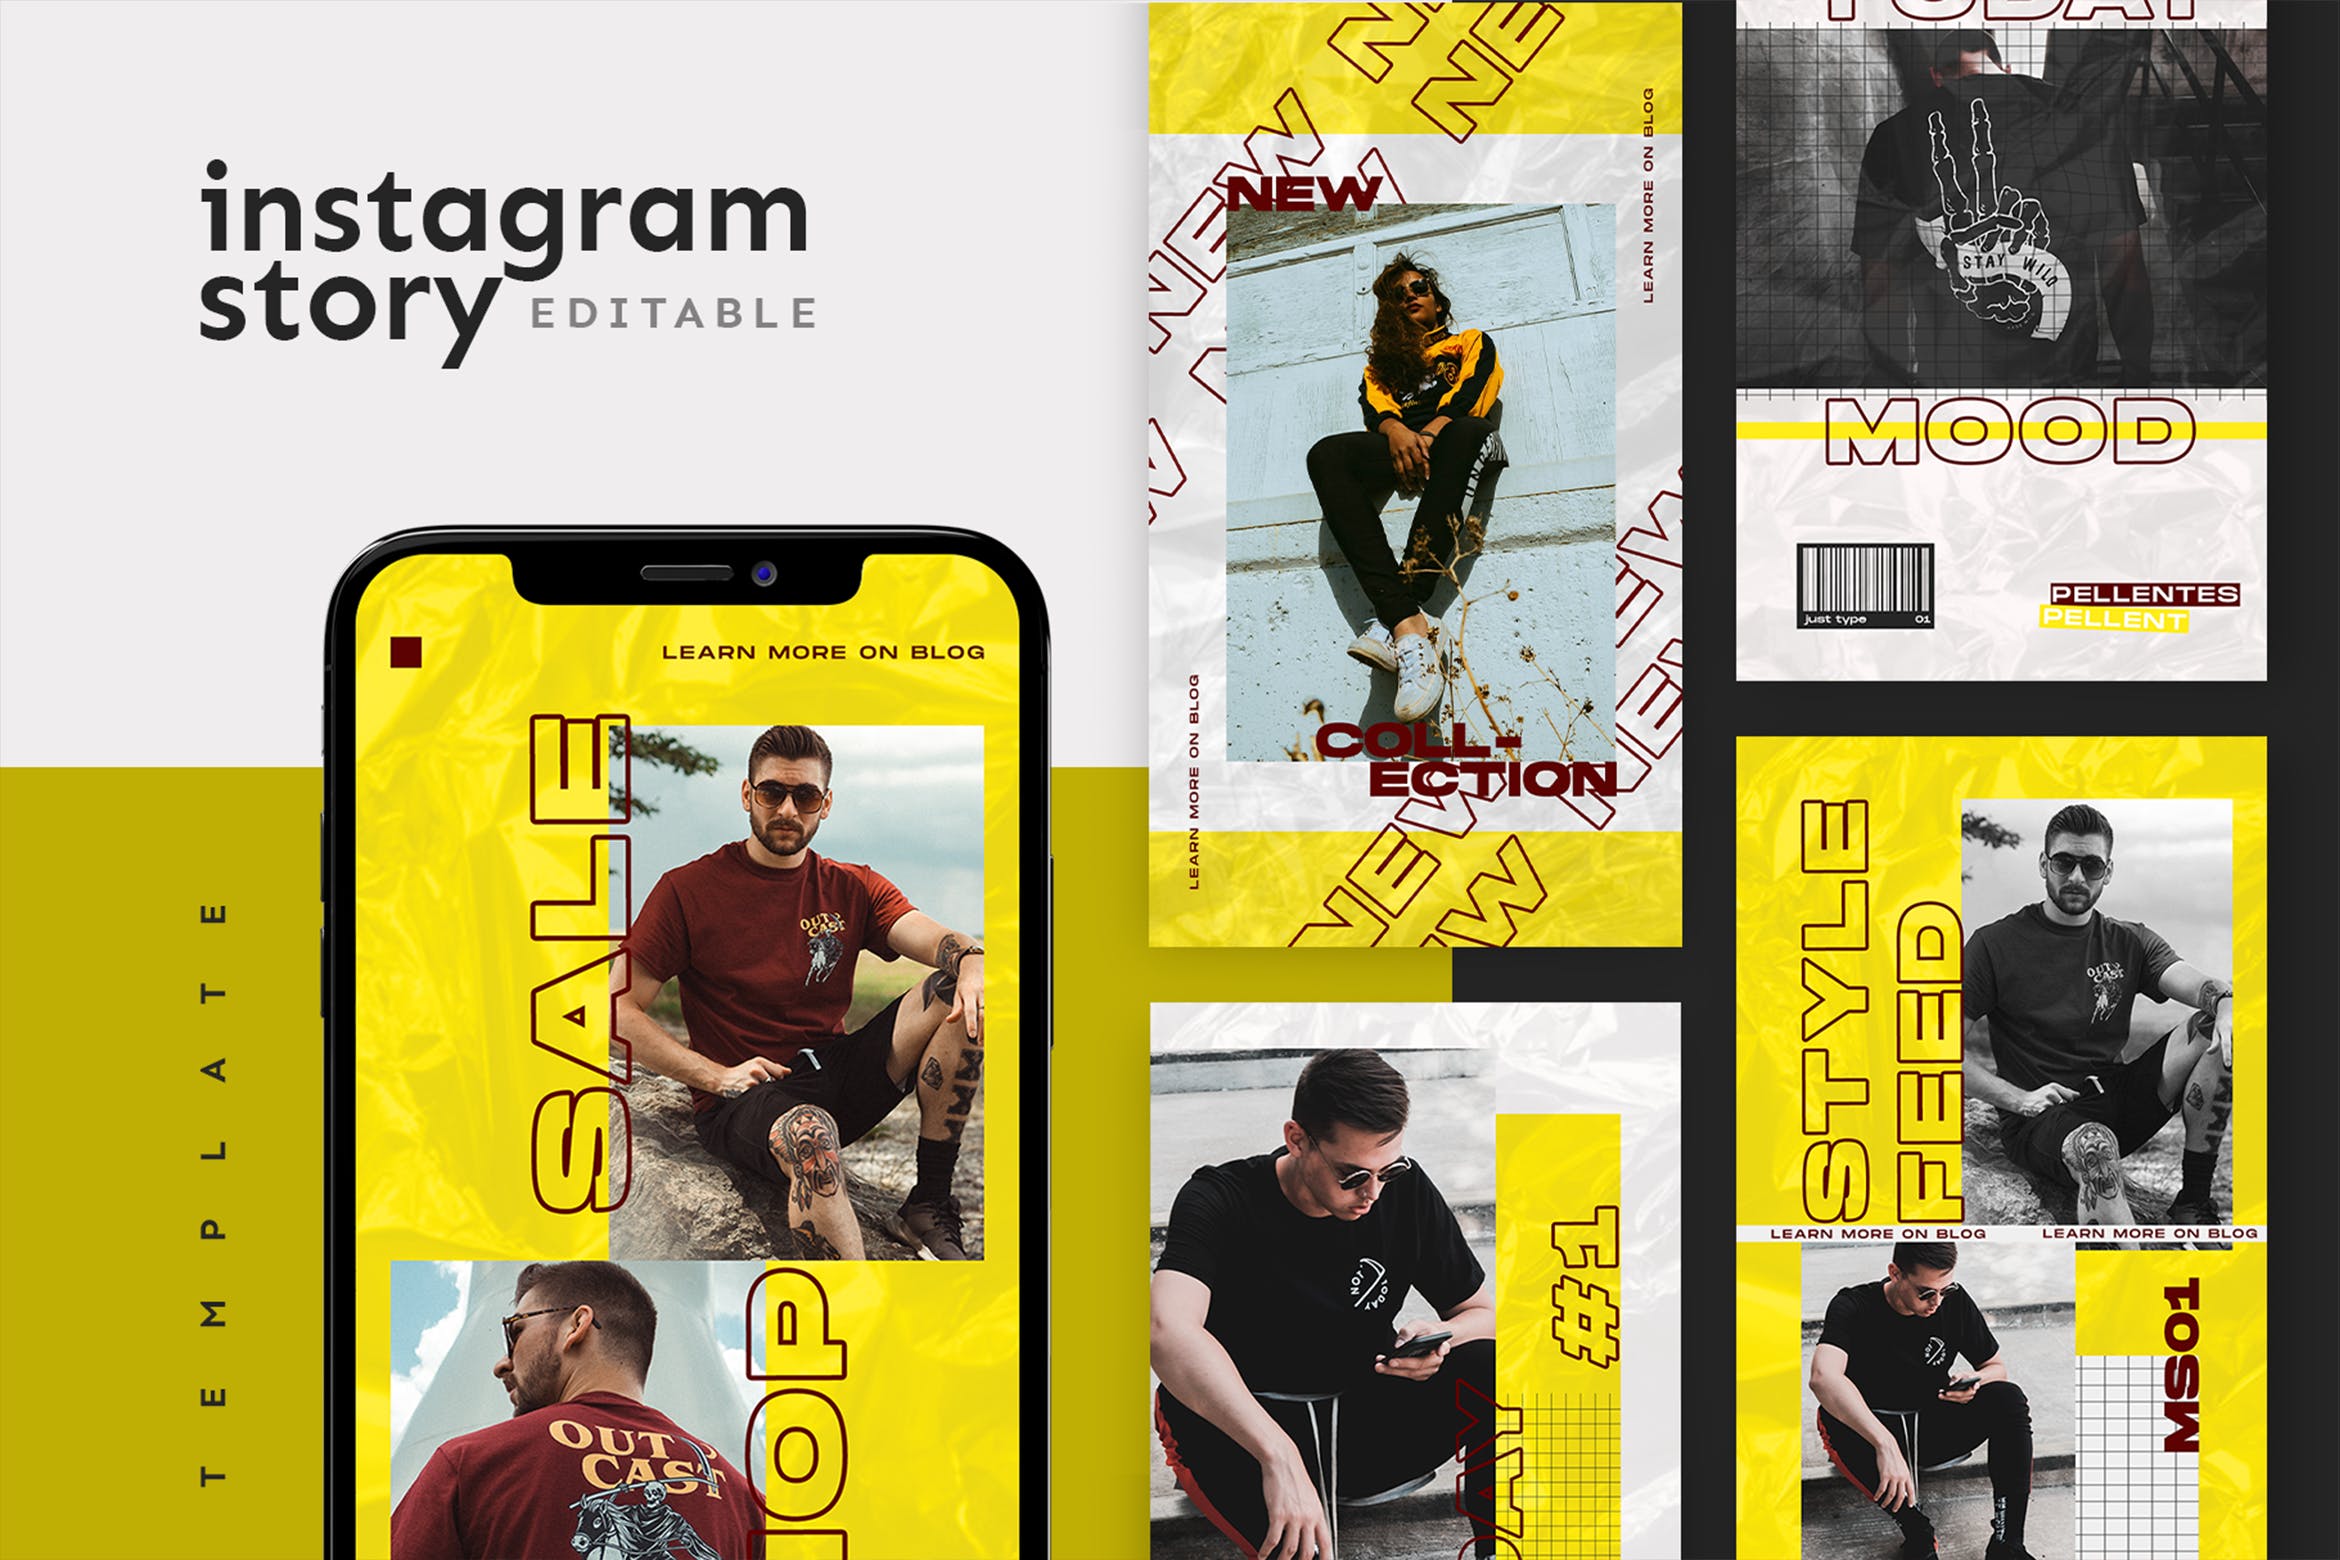 Instagram社交平台品牌故事广告设计模板非凡图库精选 Instagram Story Template插图